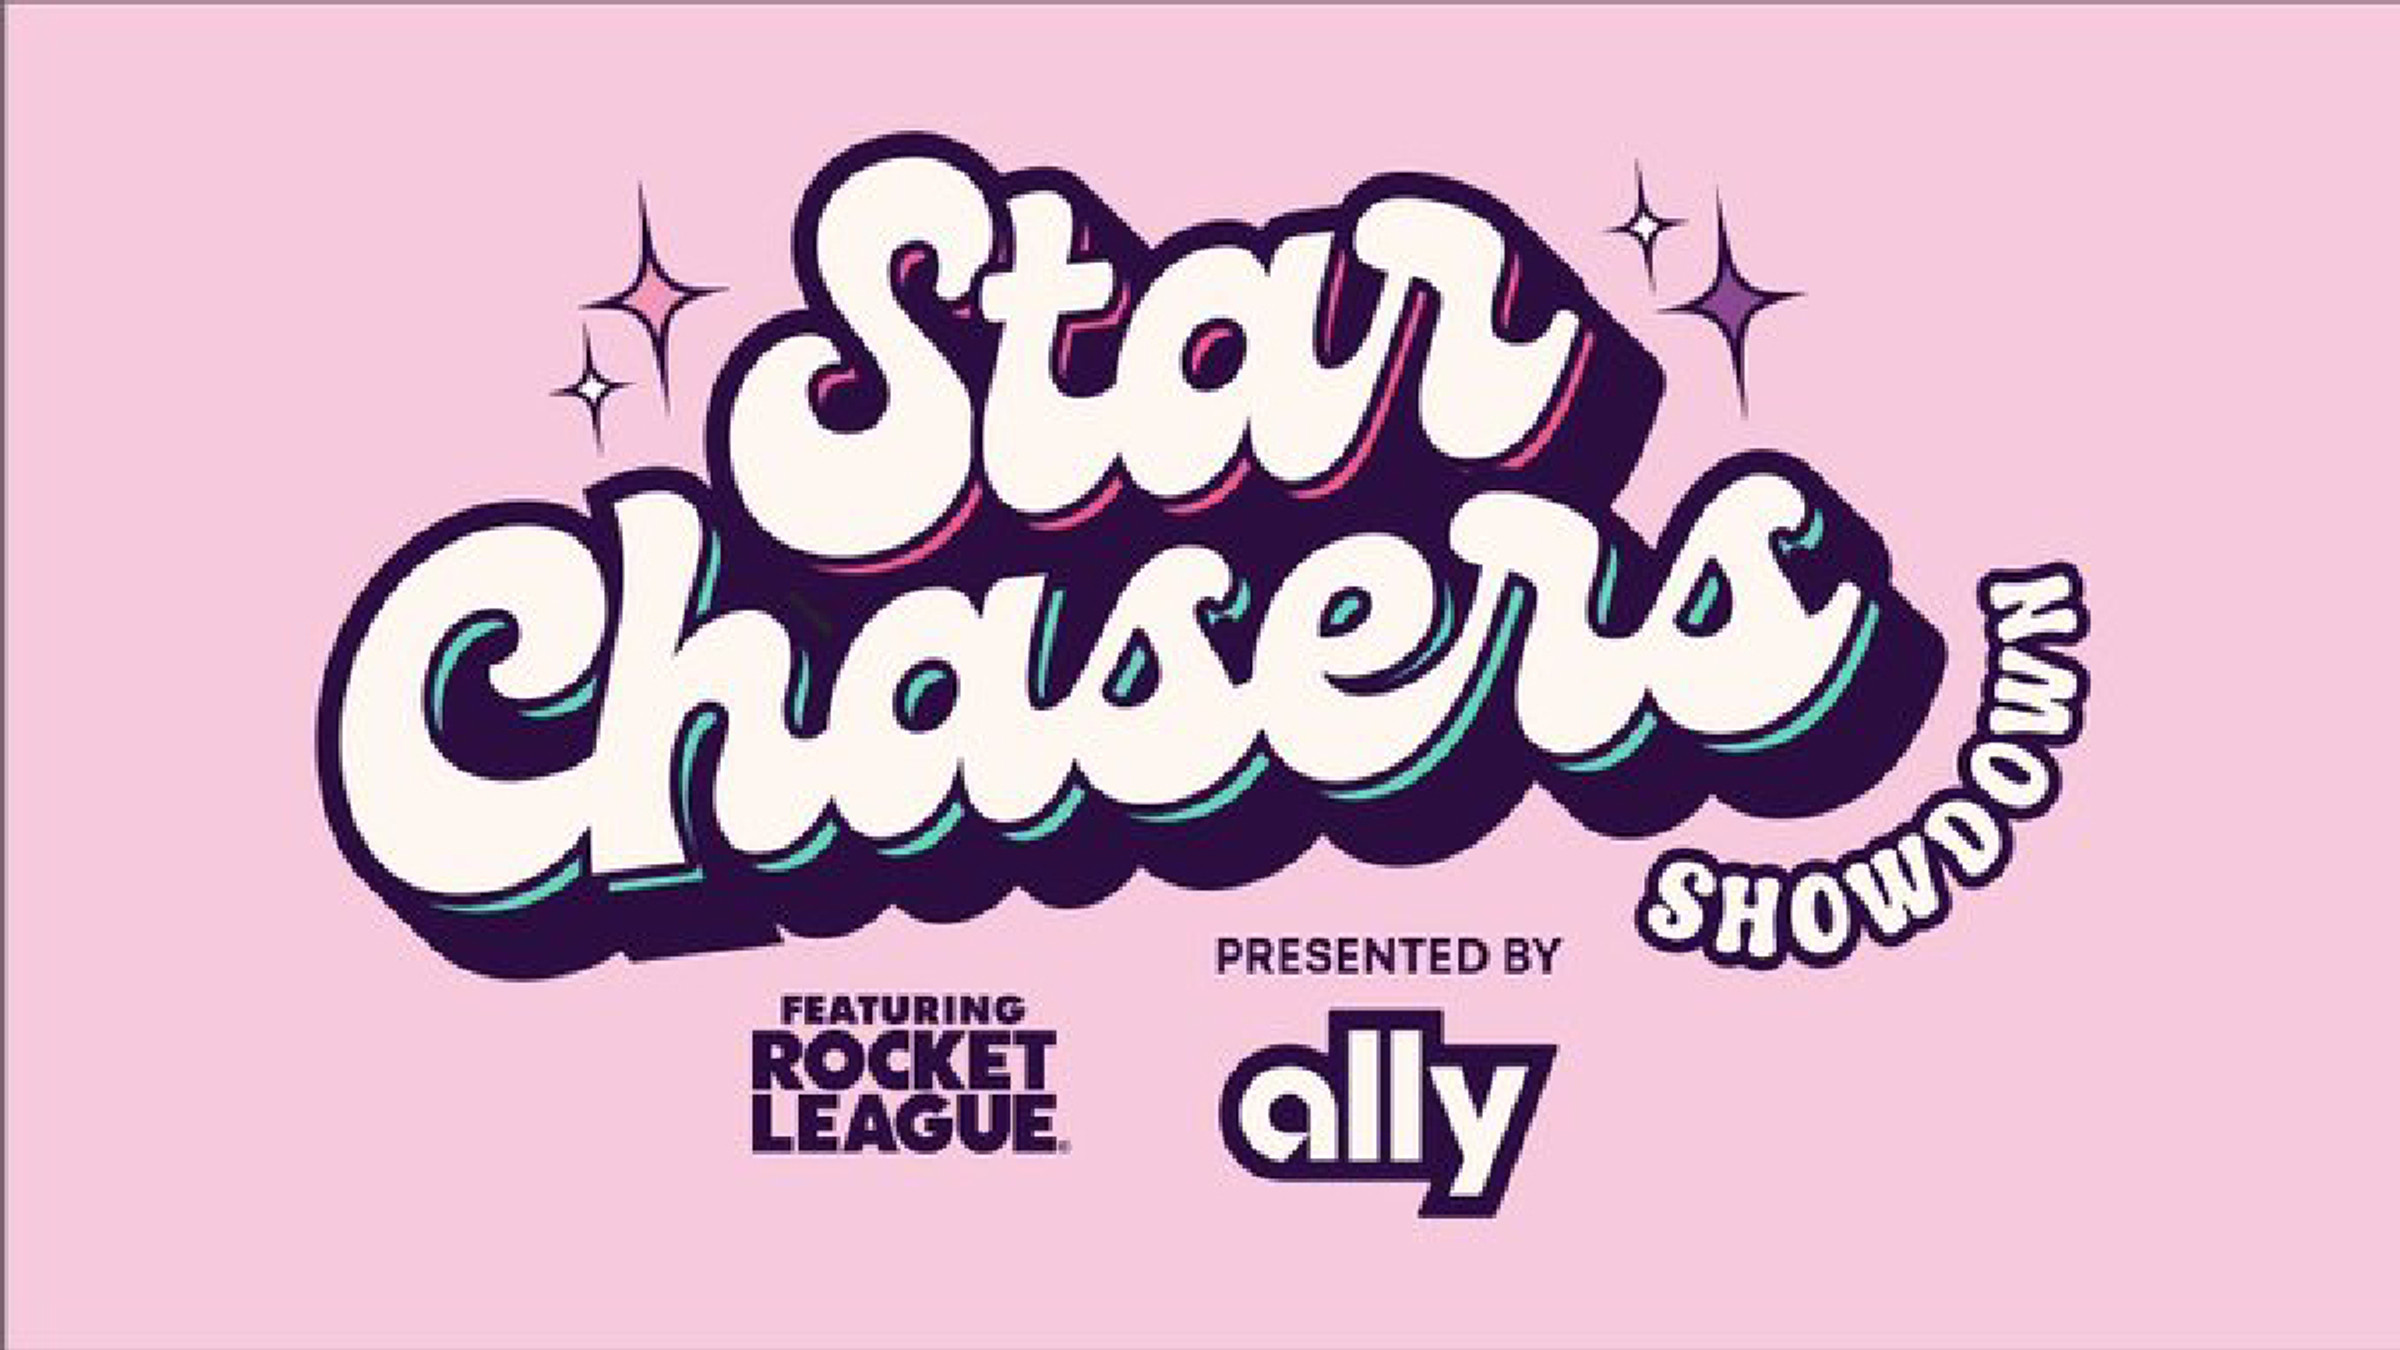 rocket-league-star-chasers-showdown-toutes-les-informations-esport-feminin